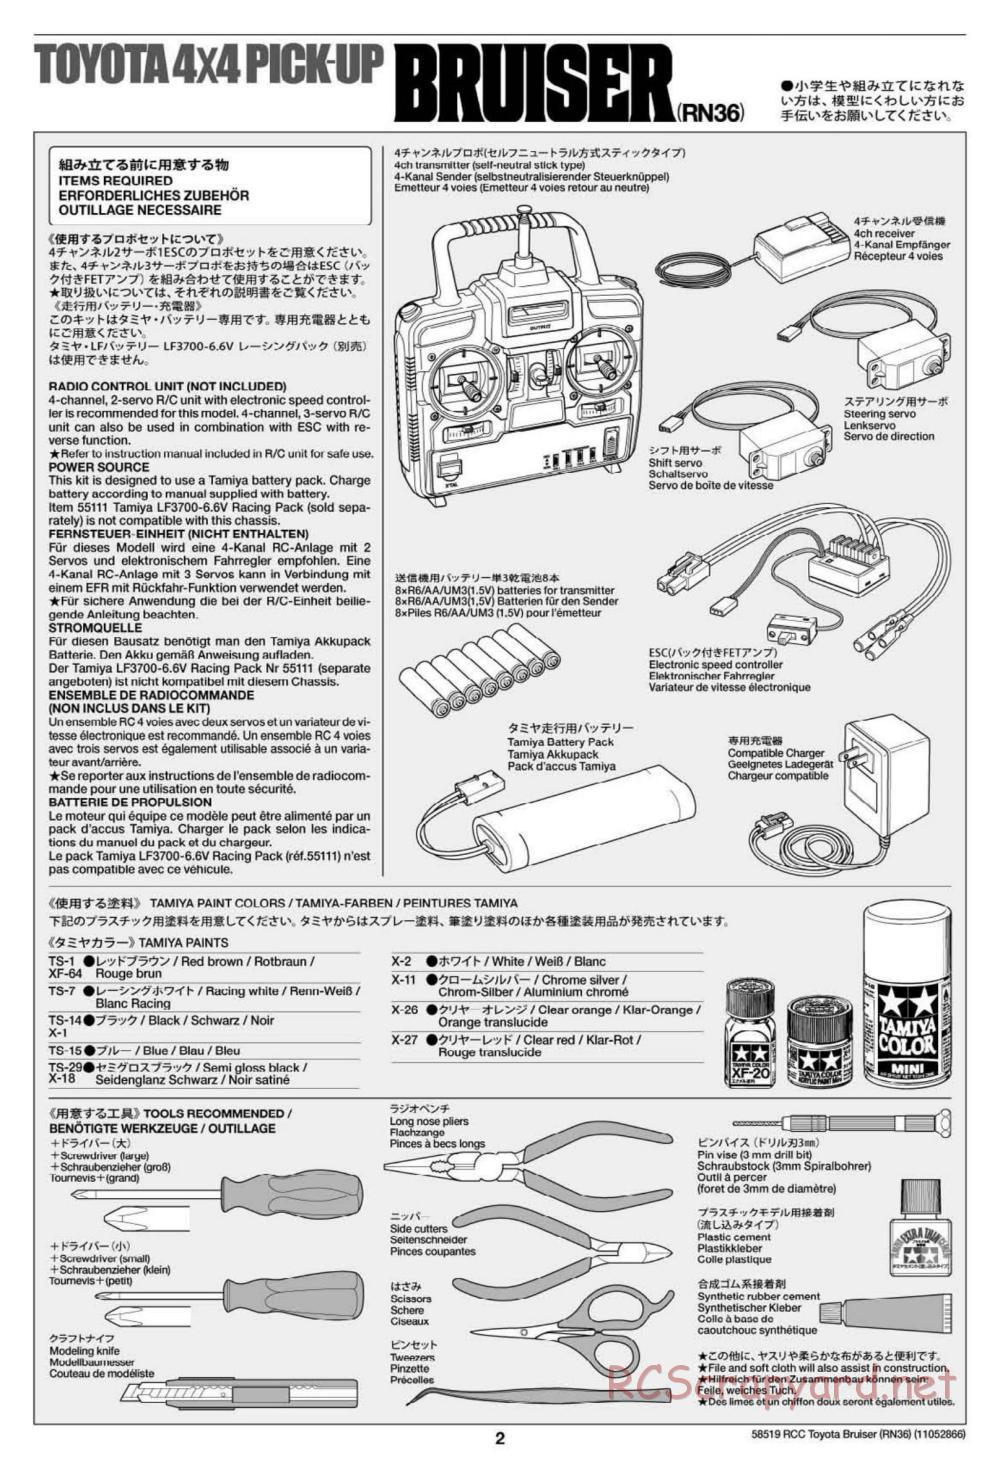 Tamiya - Toyota 4x4 Pick Up Bruiser Chassis - Manual - Page 2